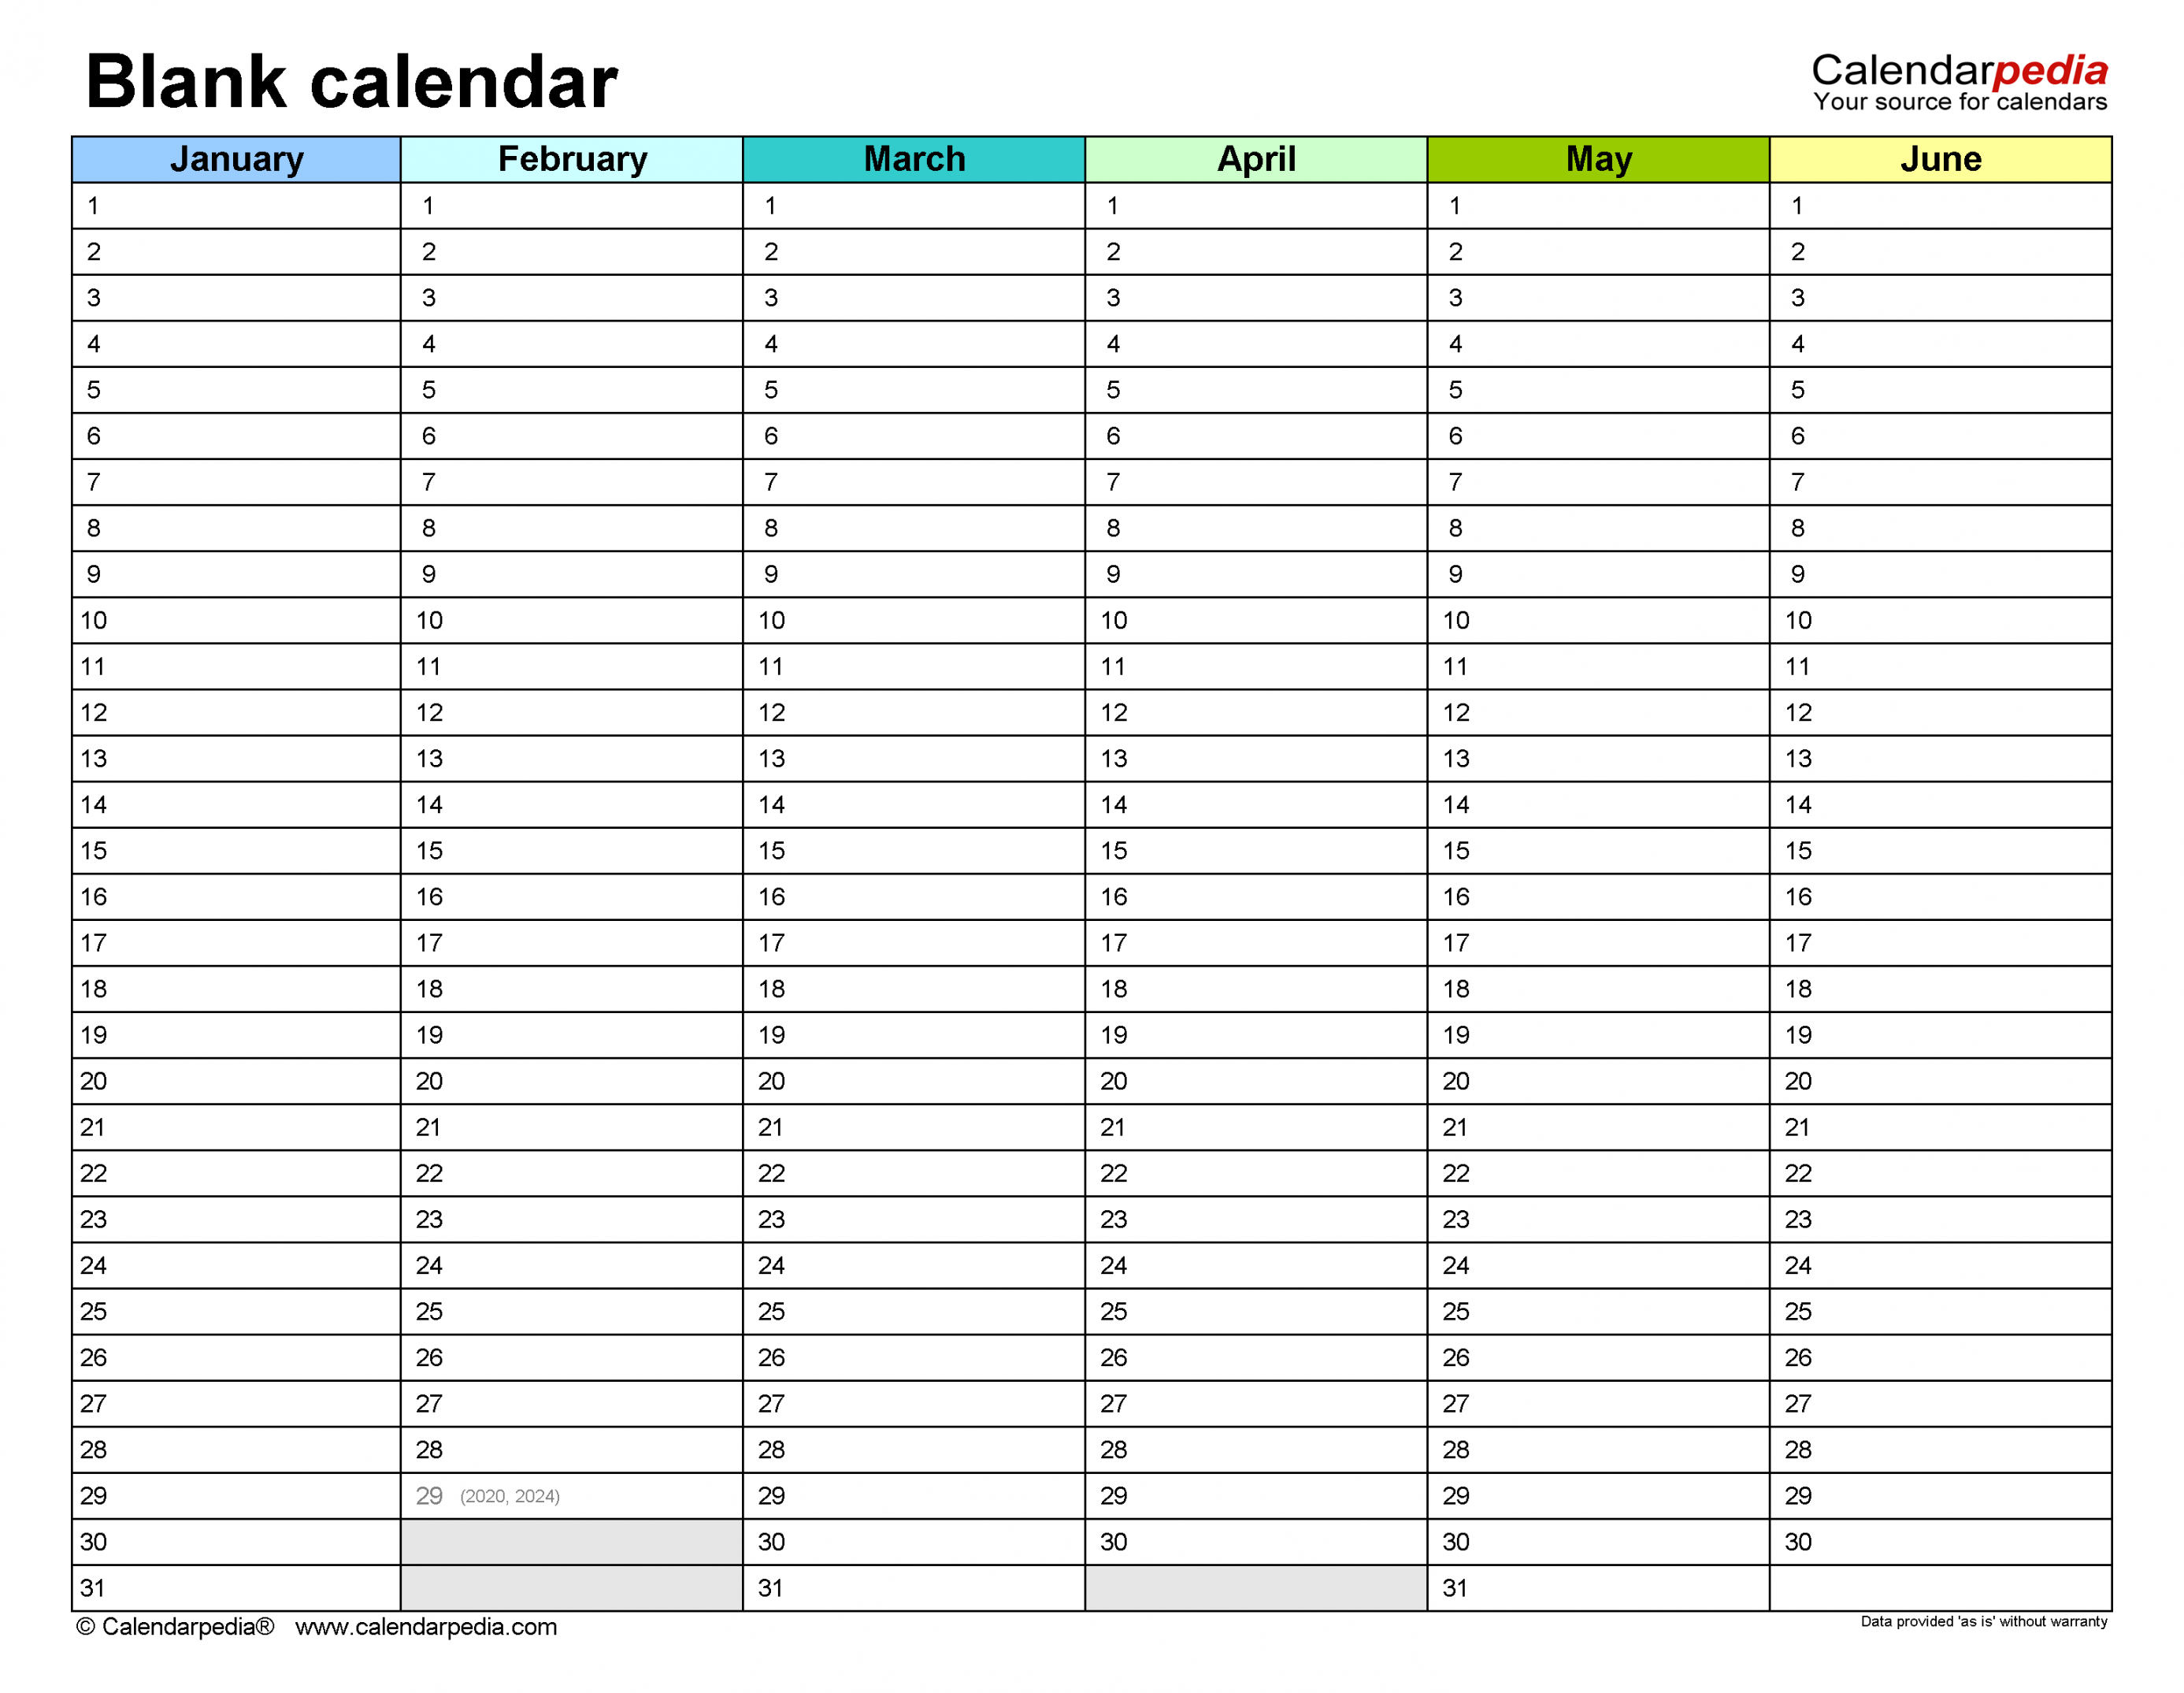 Blank Calendars - Free Printable Microsoft Word templates